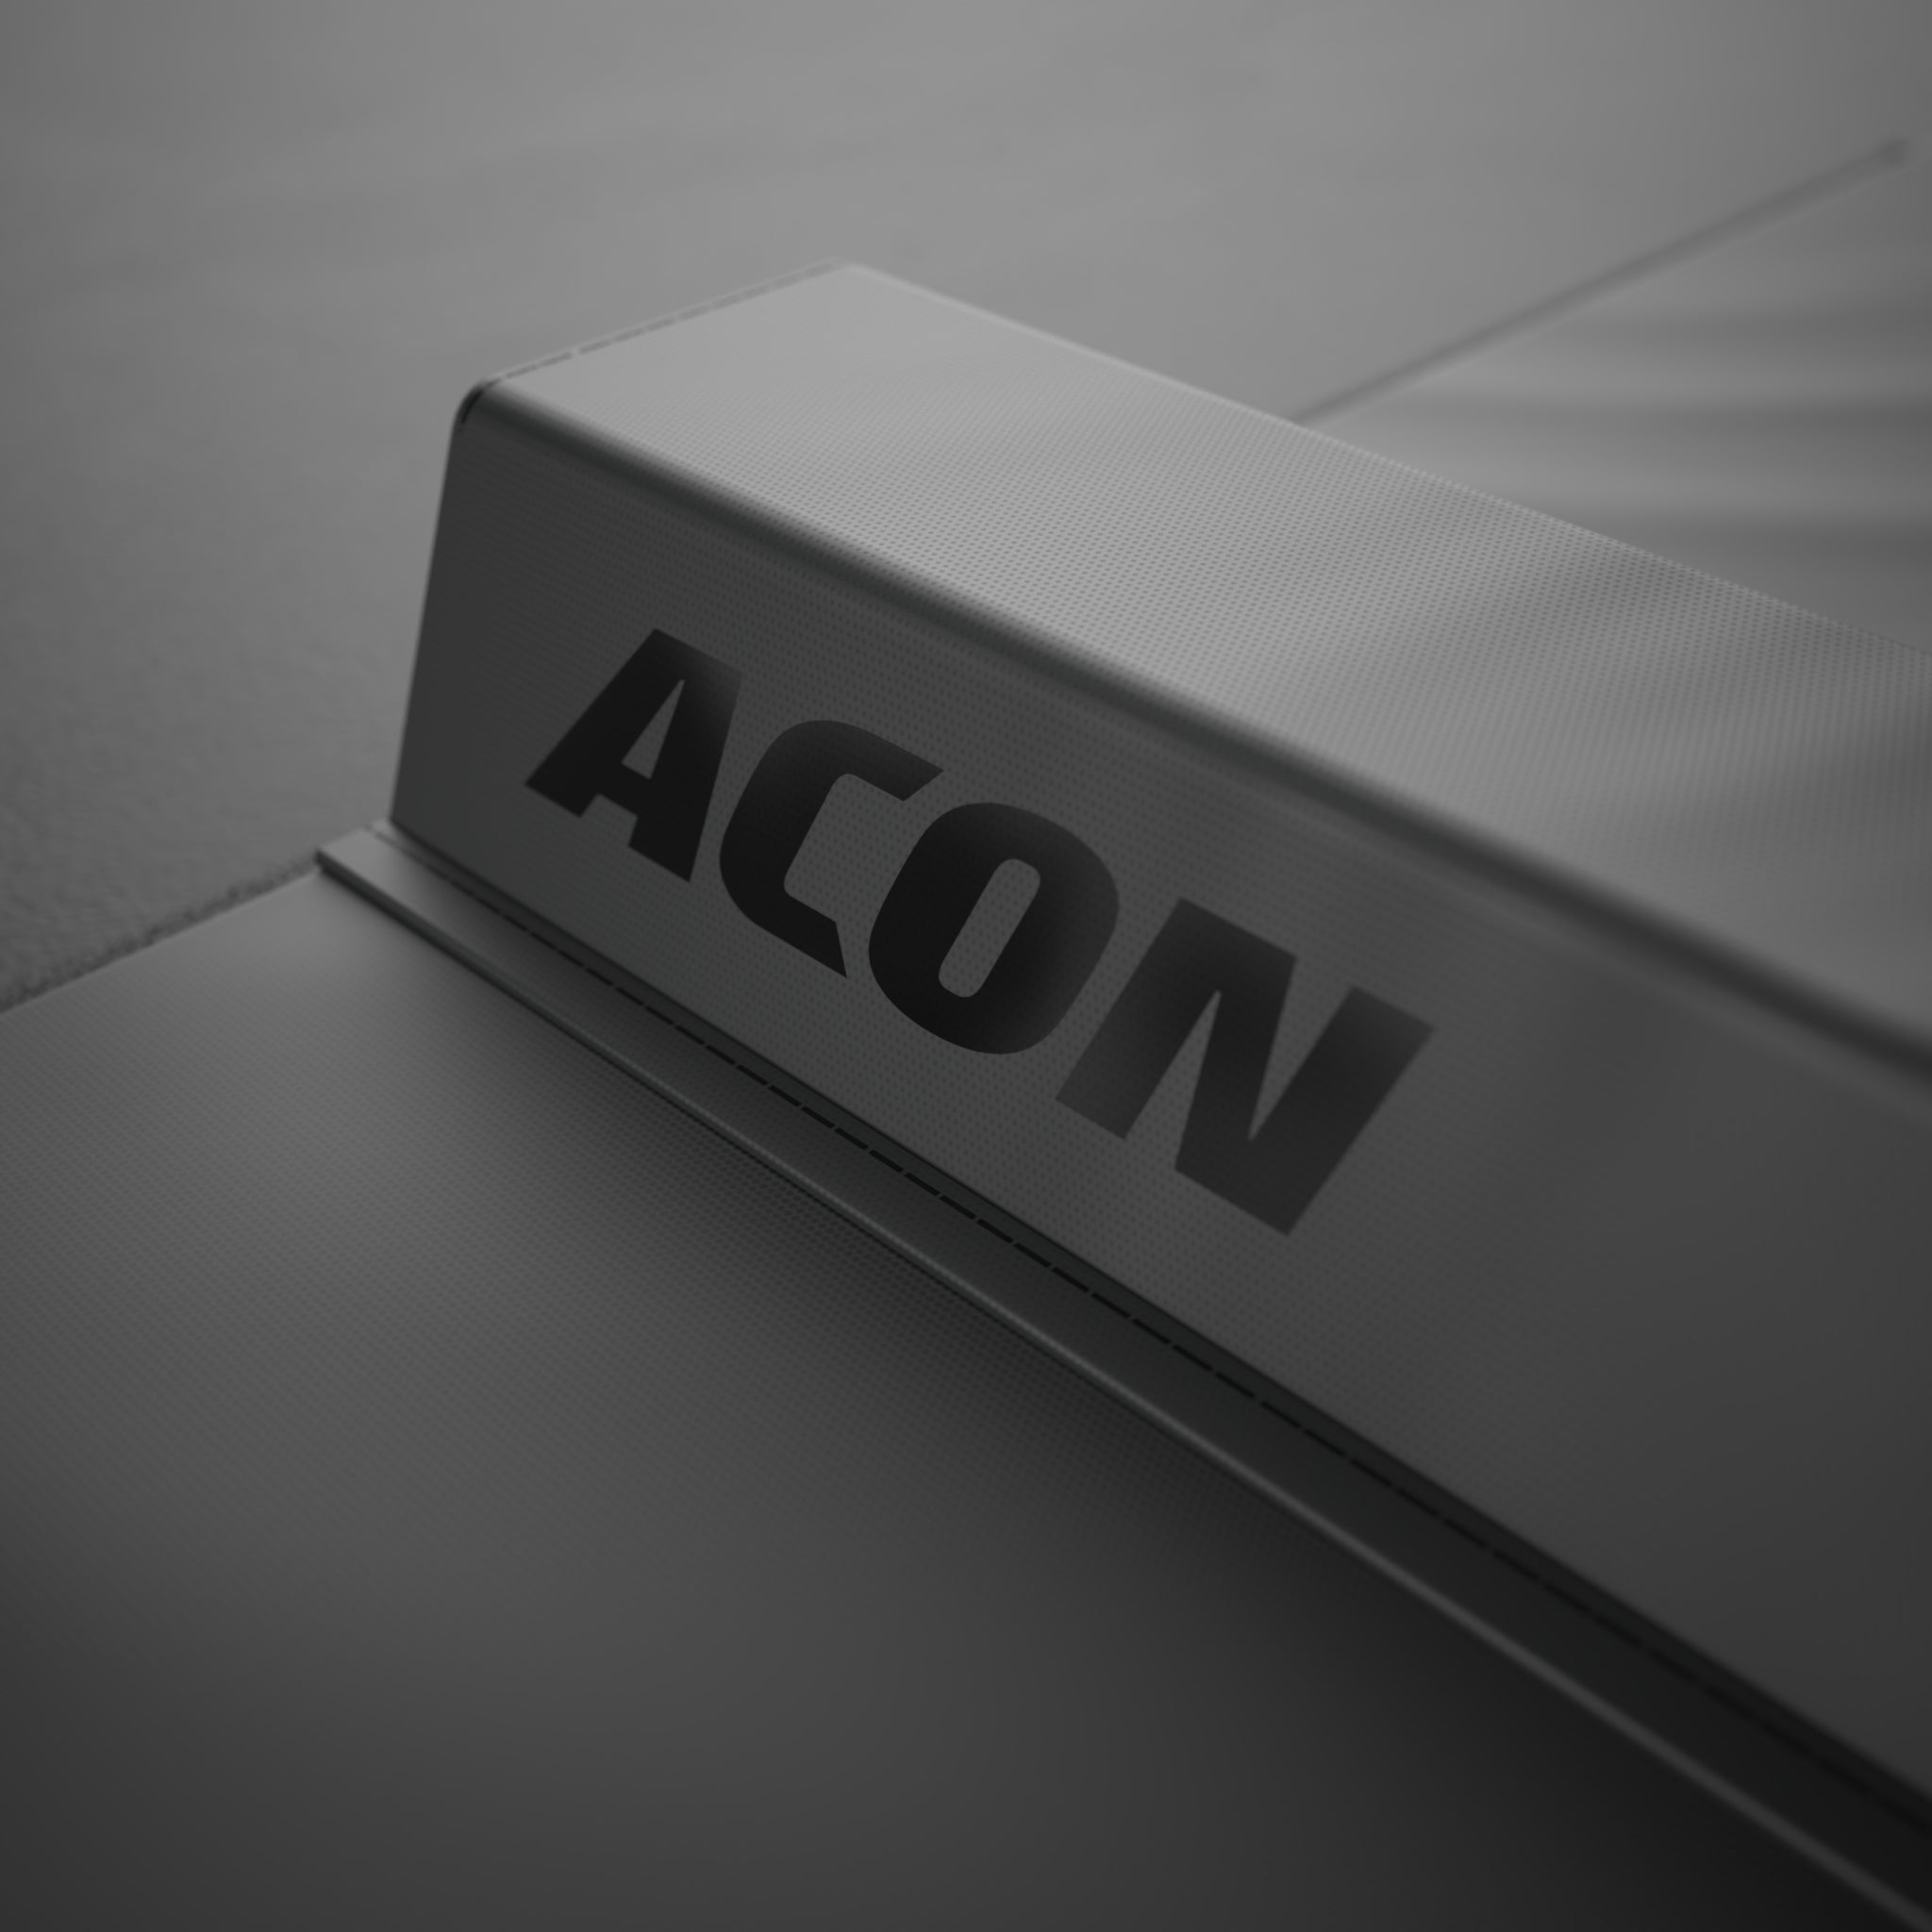 A close up of the Black Acon logo on Black Edition ACON Balance Beam